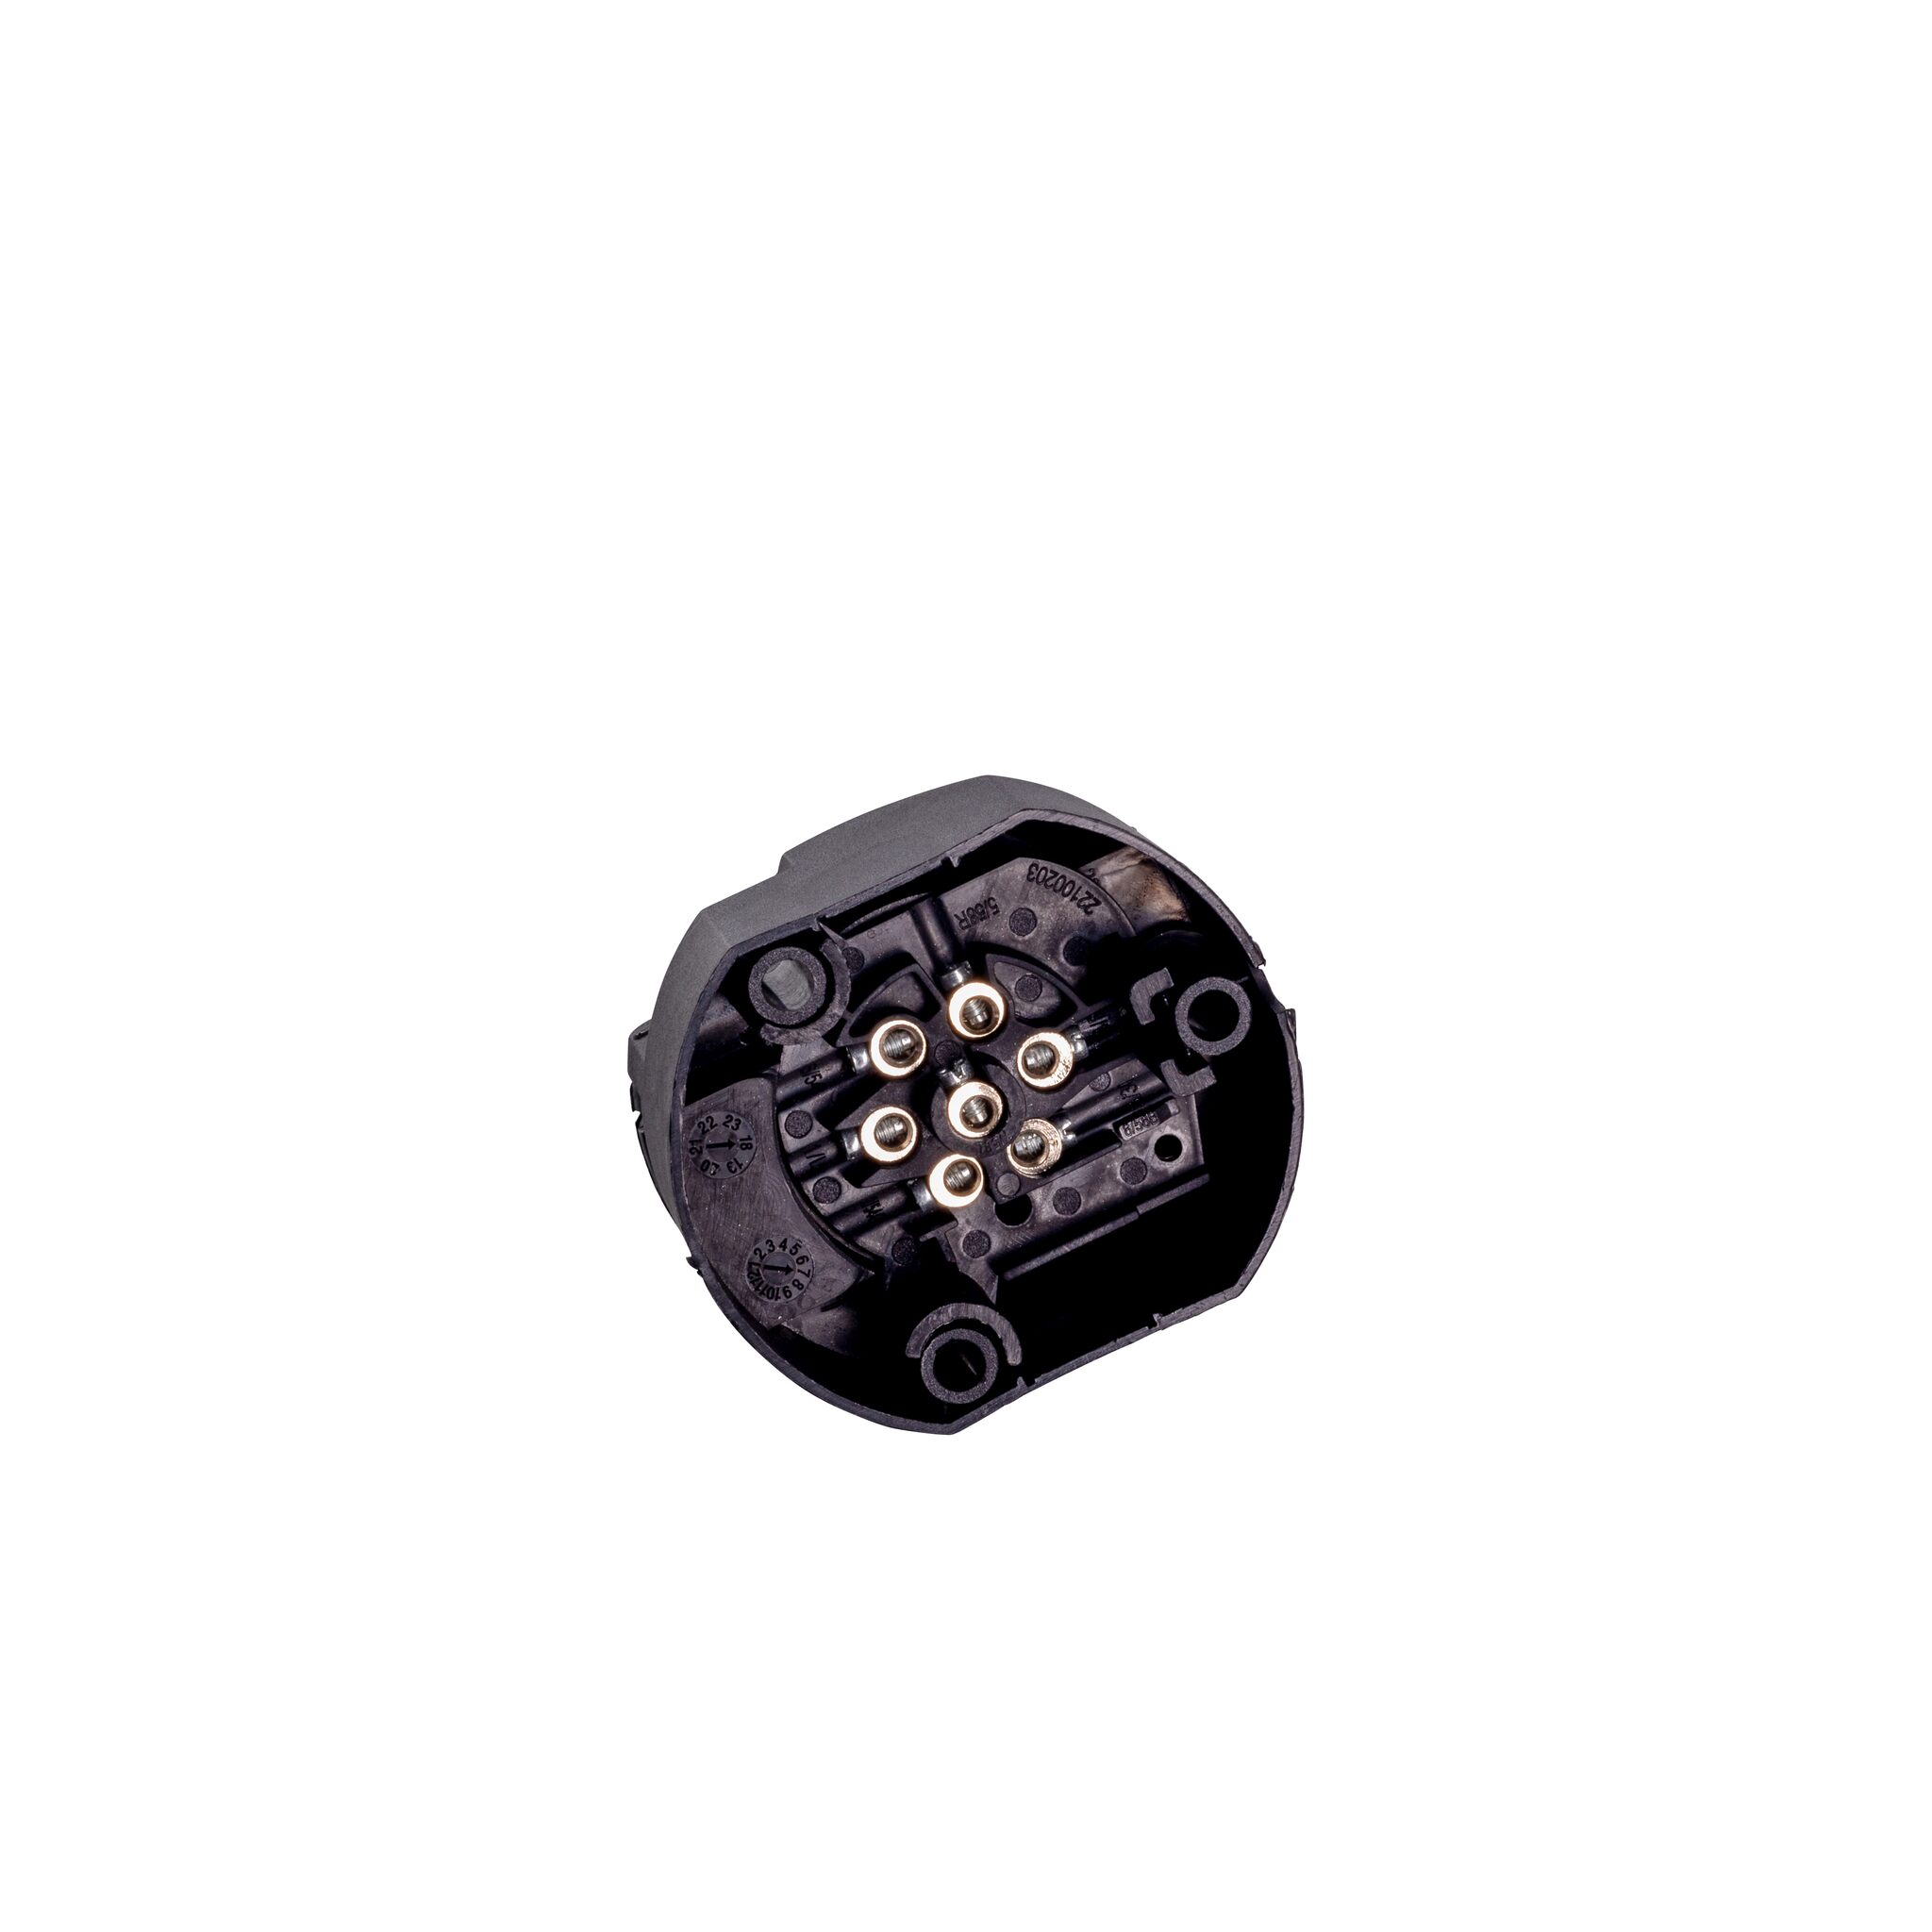 Trailer socket 7-pin